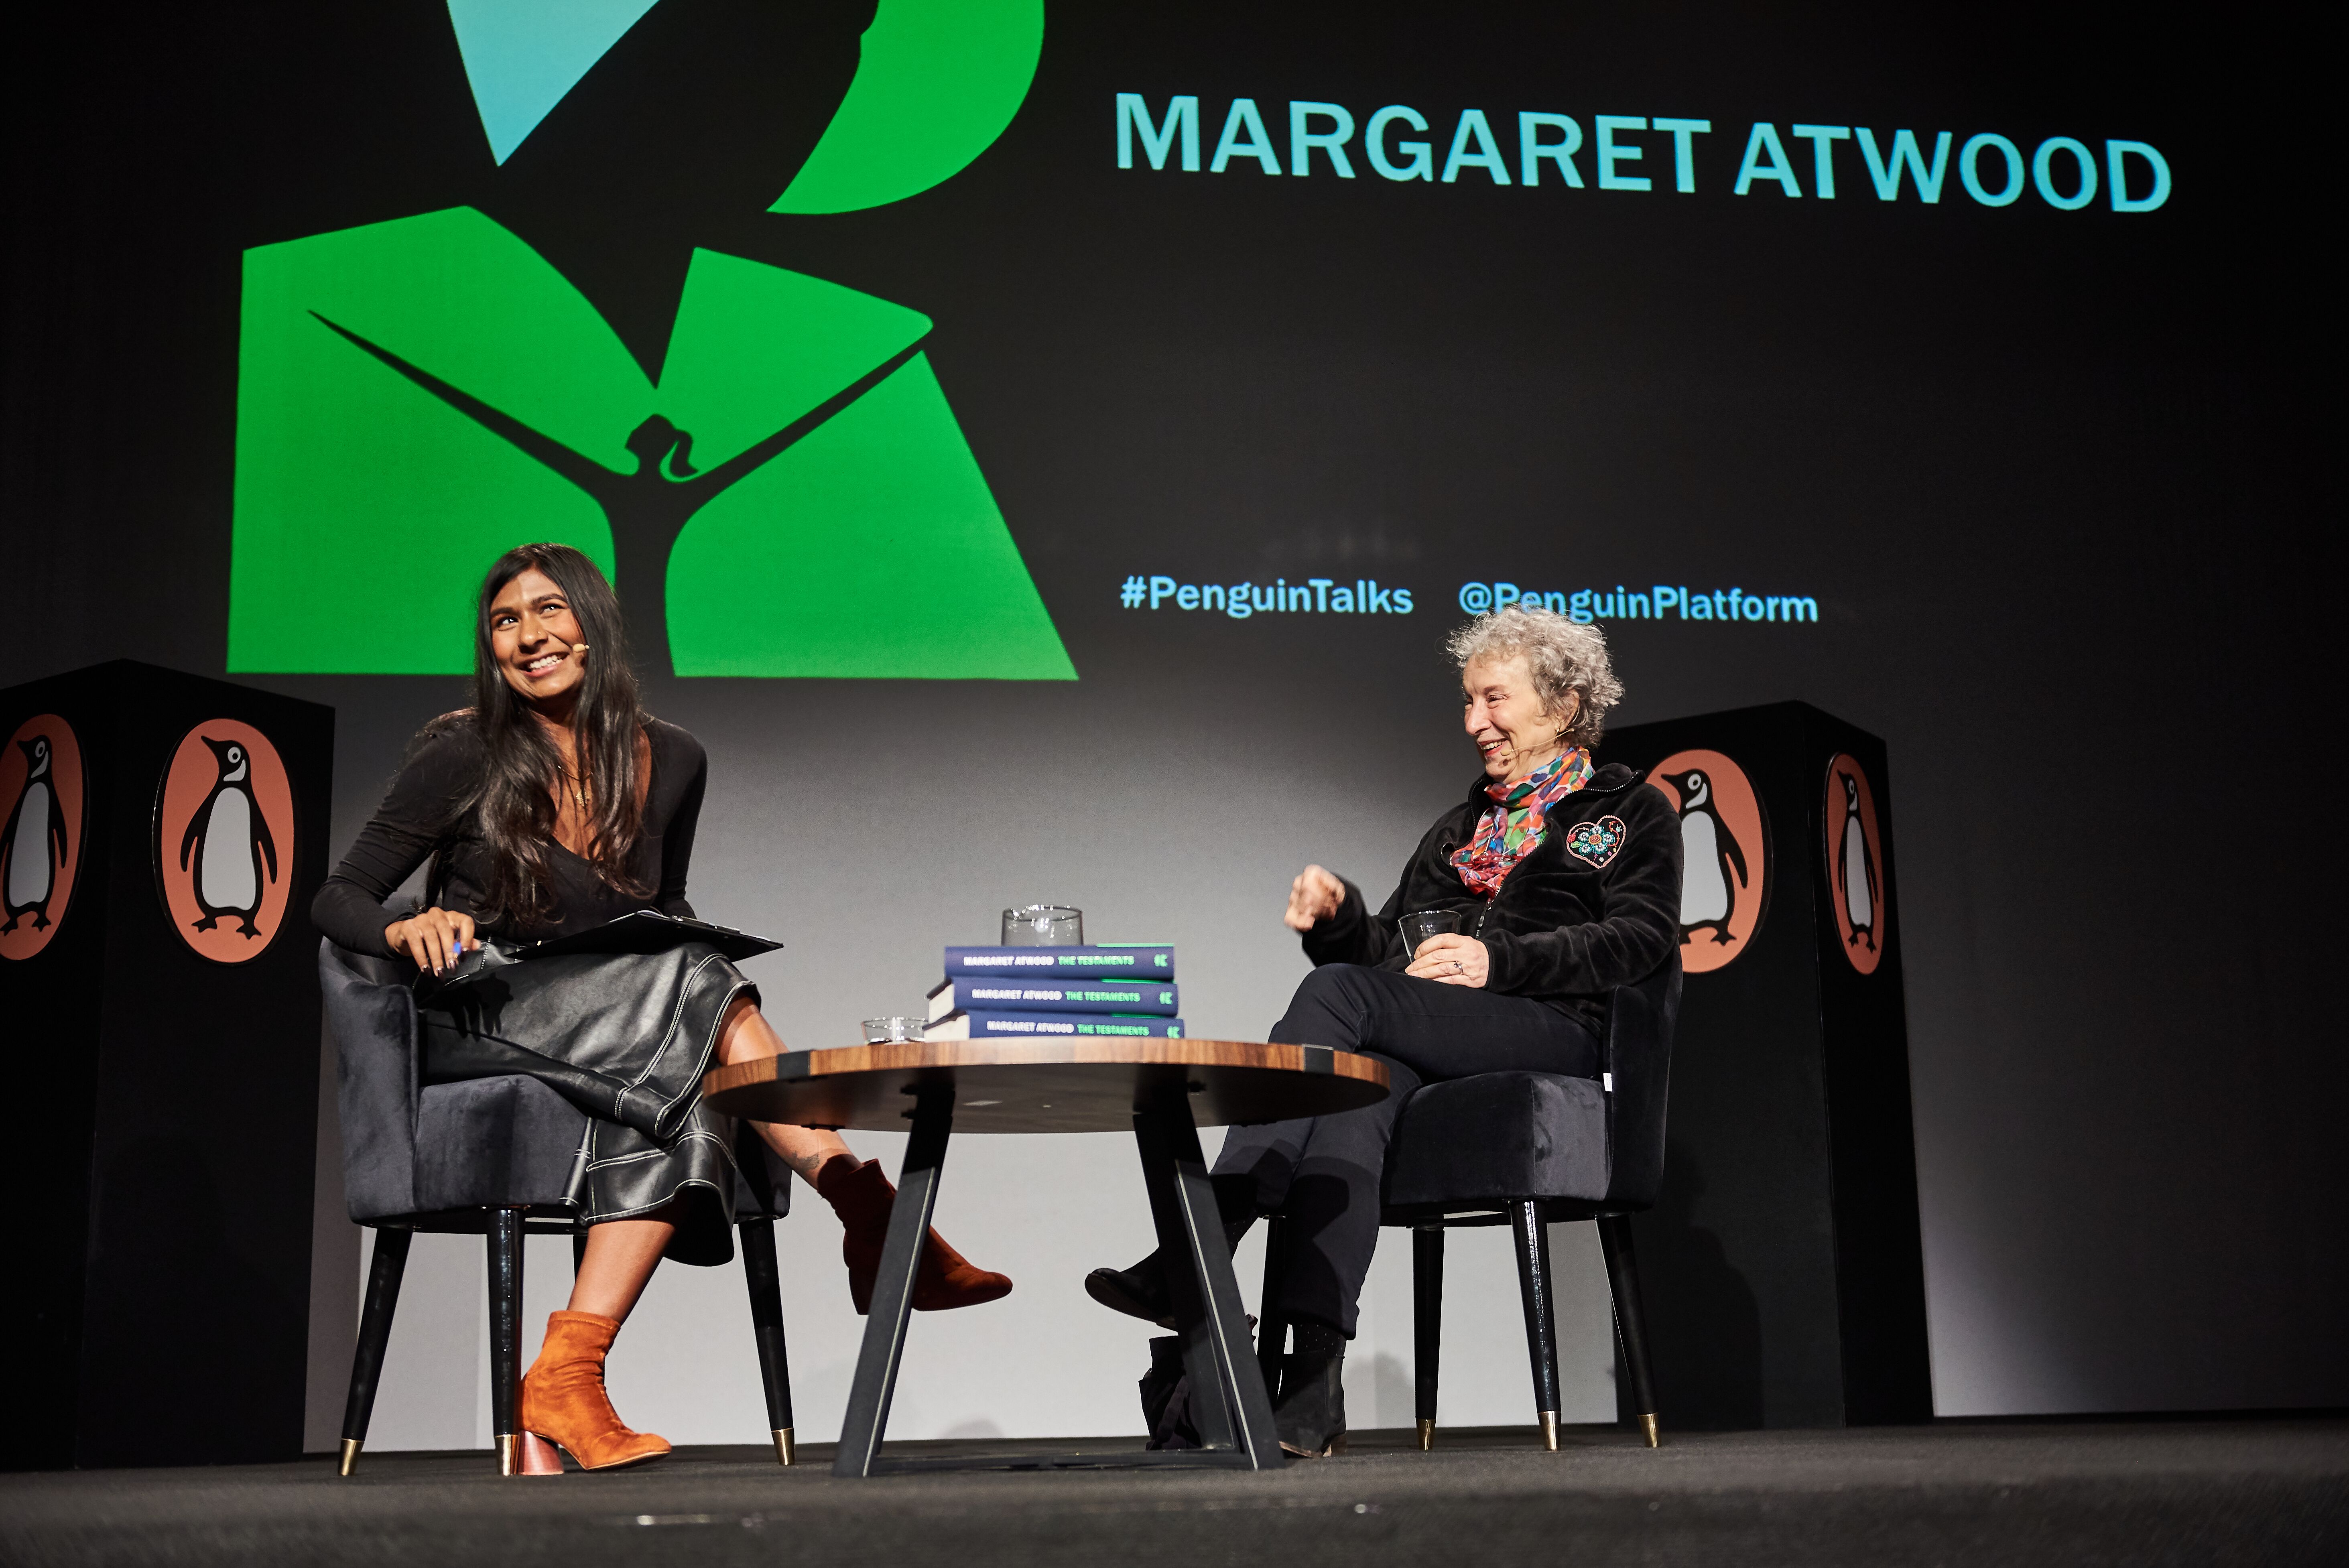 Ash Sarkar and Margaret Atwood at Penguin Talks in Salford